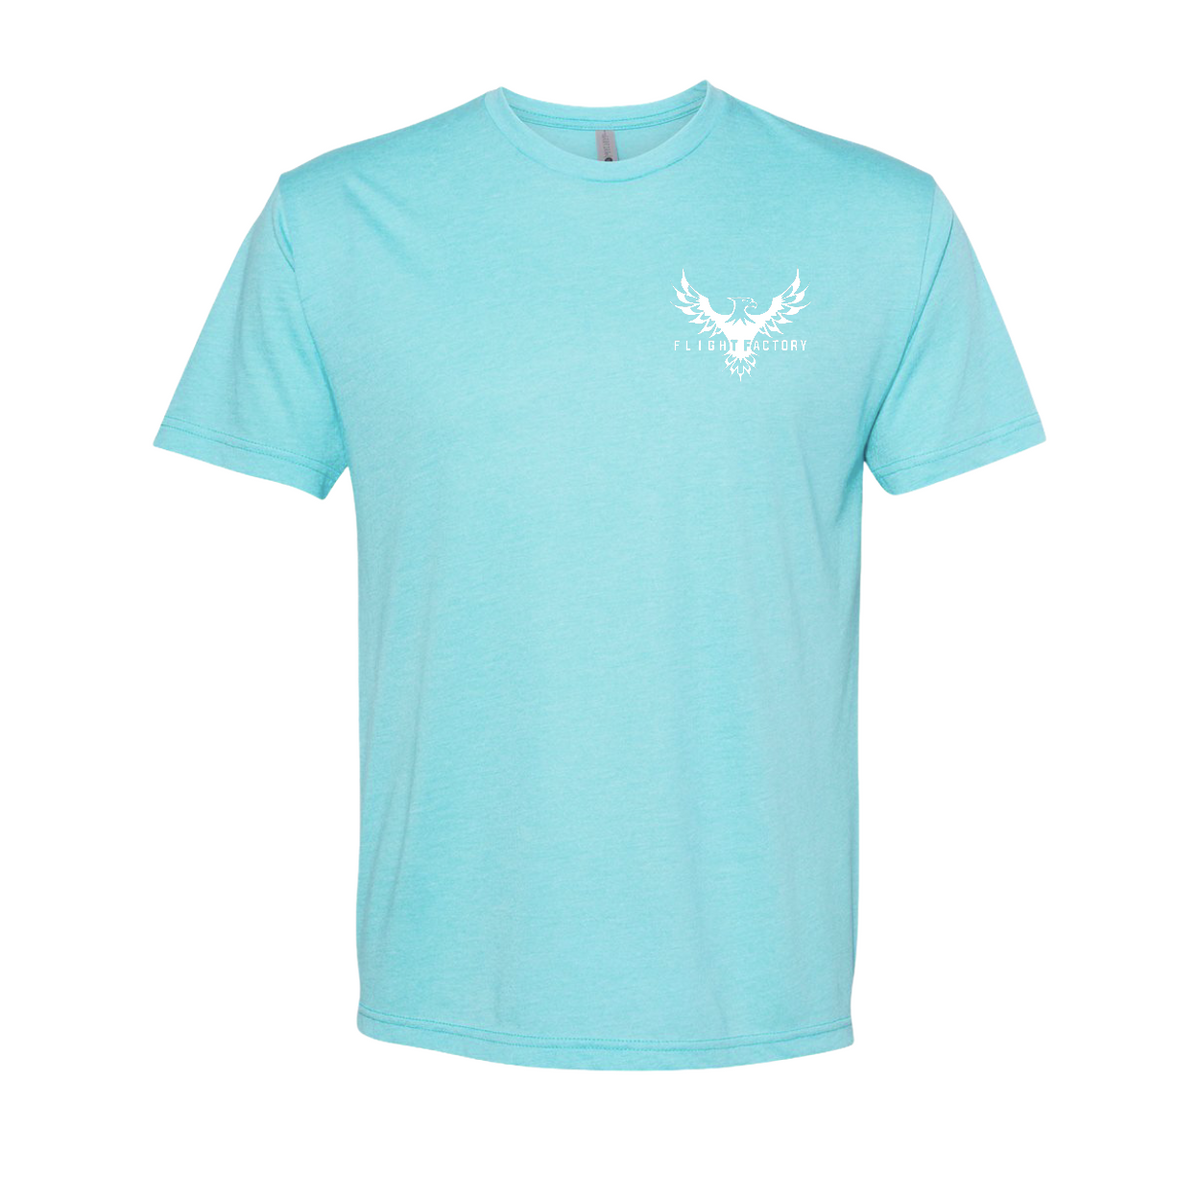 Flight Factory Eagle Tri-Blend T-Shirt